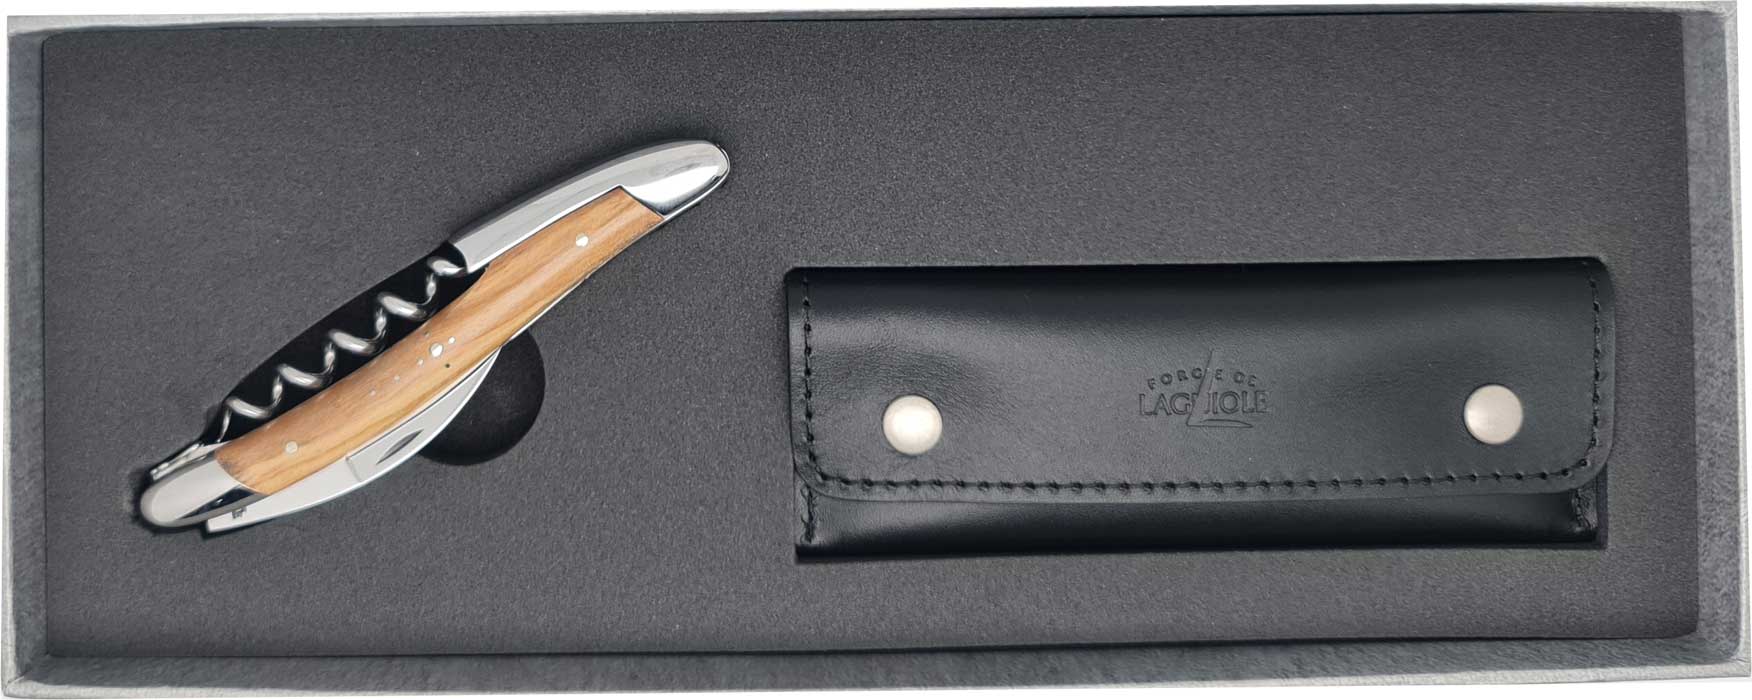 FORGE DE LAGUIOLE Sommelier polished olive wood leather case black Set 2 piece